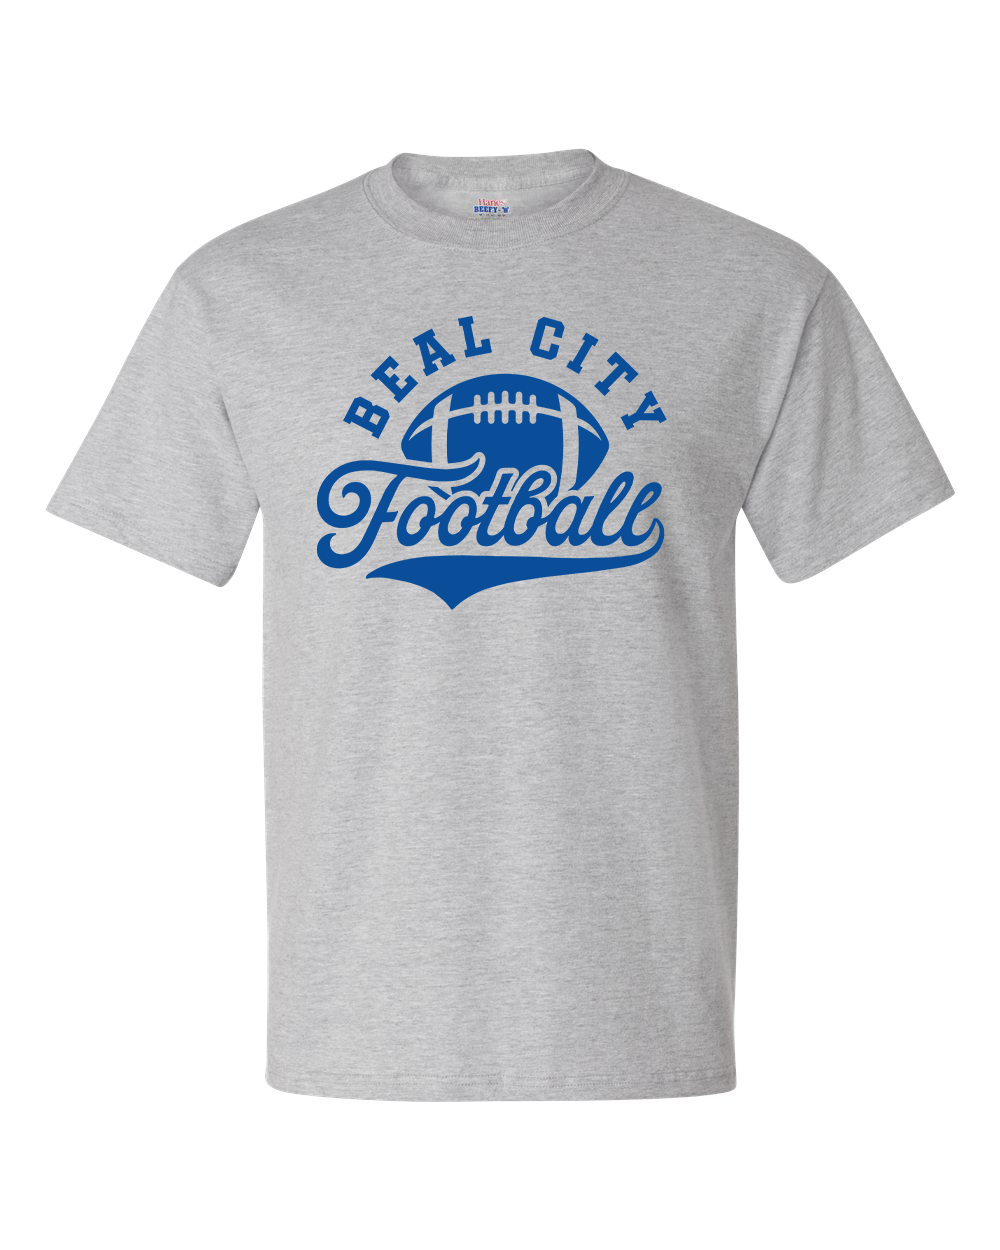 Beal City Football Design